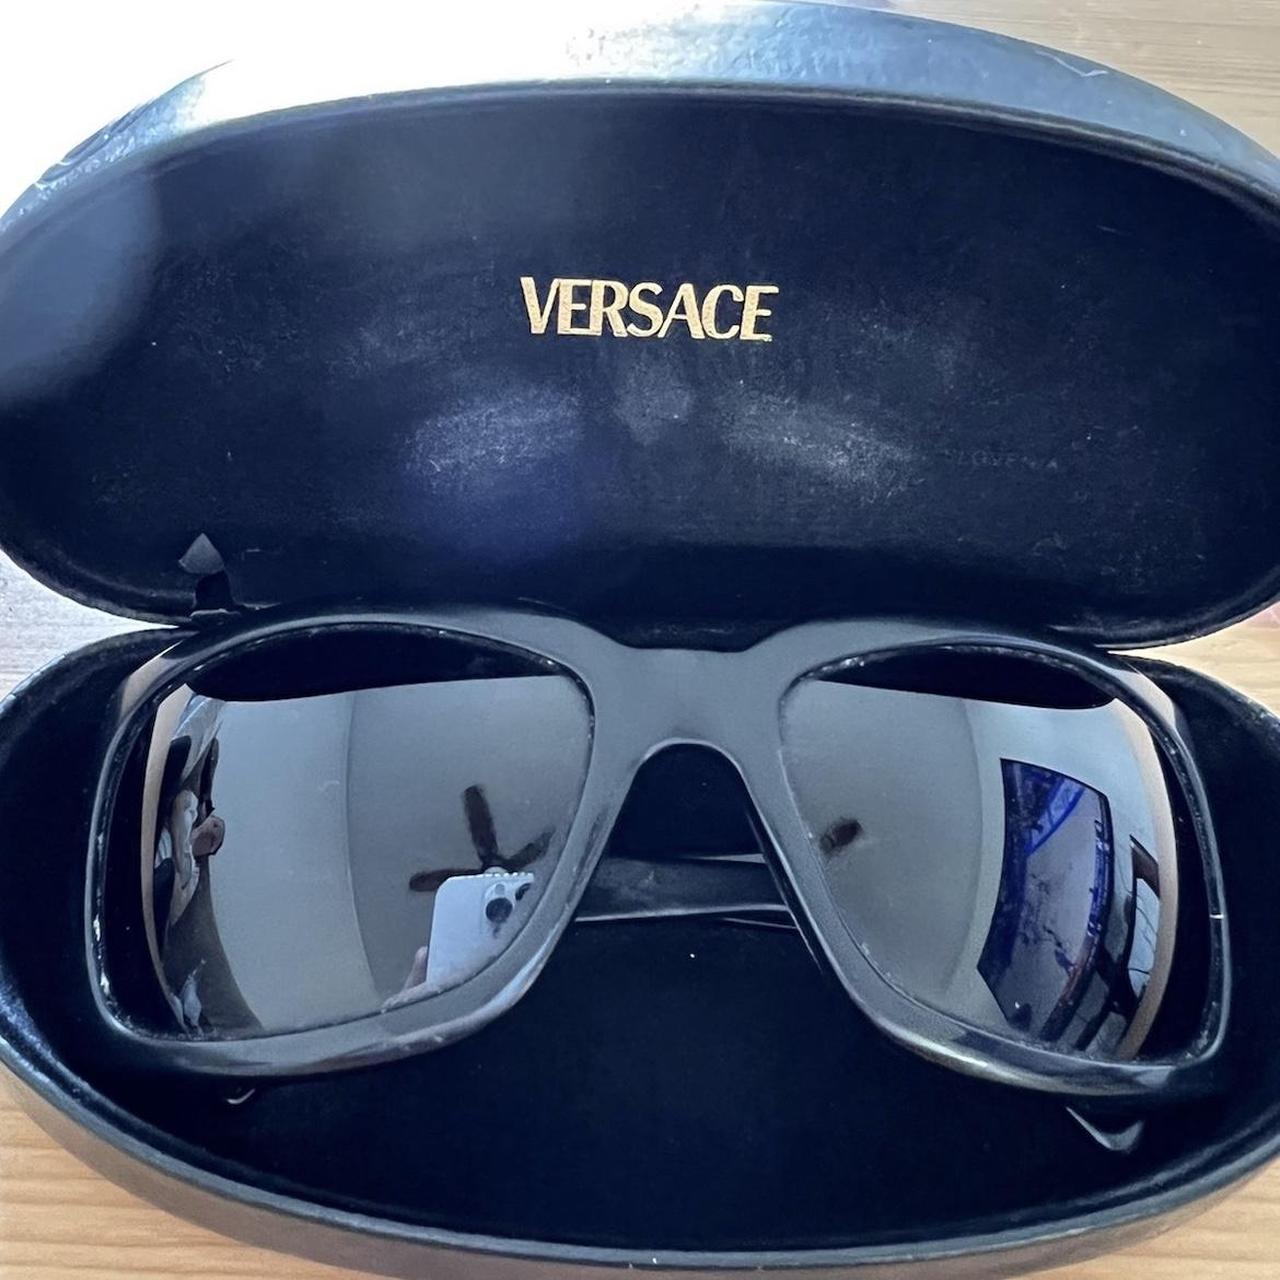 versace women's sunglasses w/ case #versace... - Depop